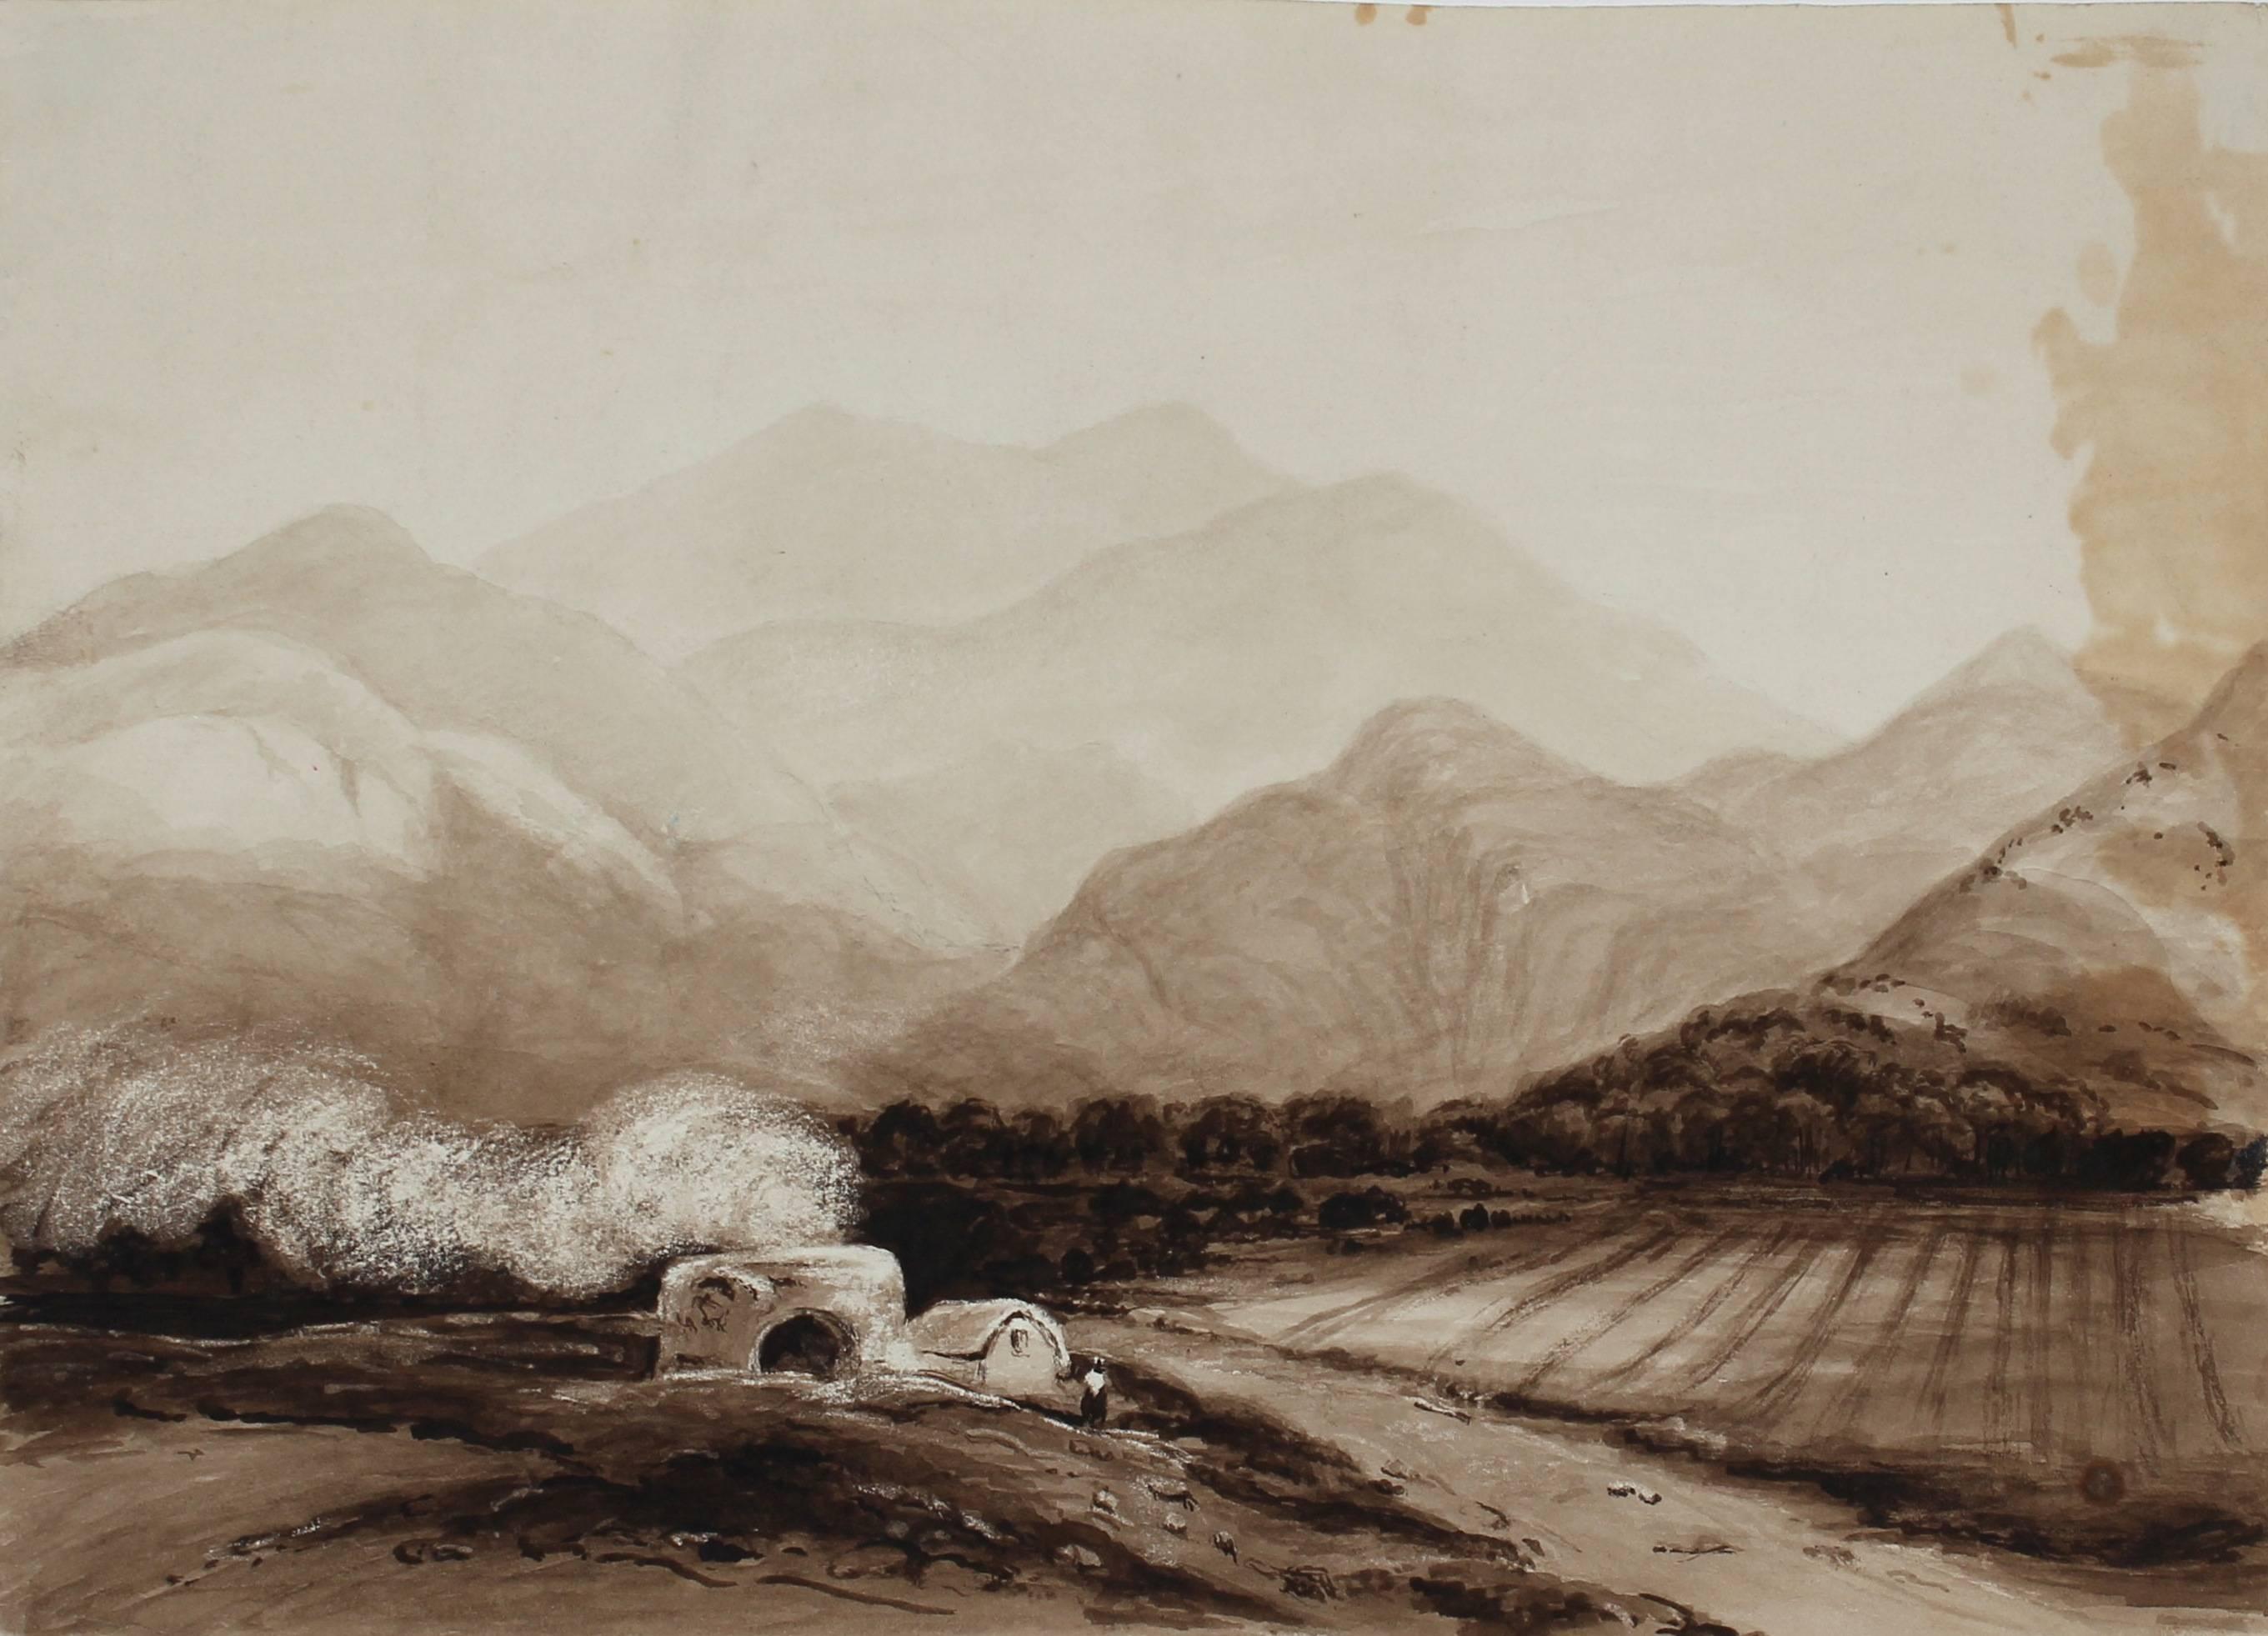 James Ramsay Landscape Art – British Landscape in Sepia, Watercolor Painting, Circa Mid 1800s